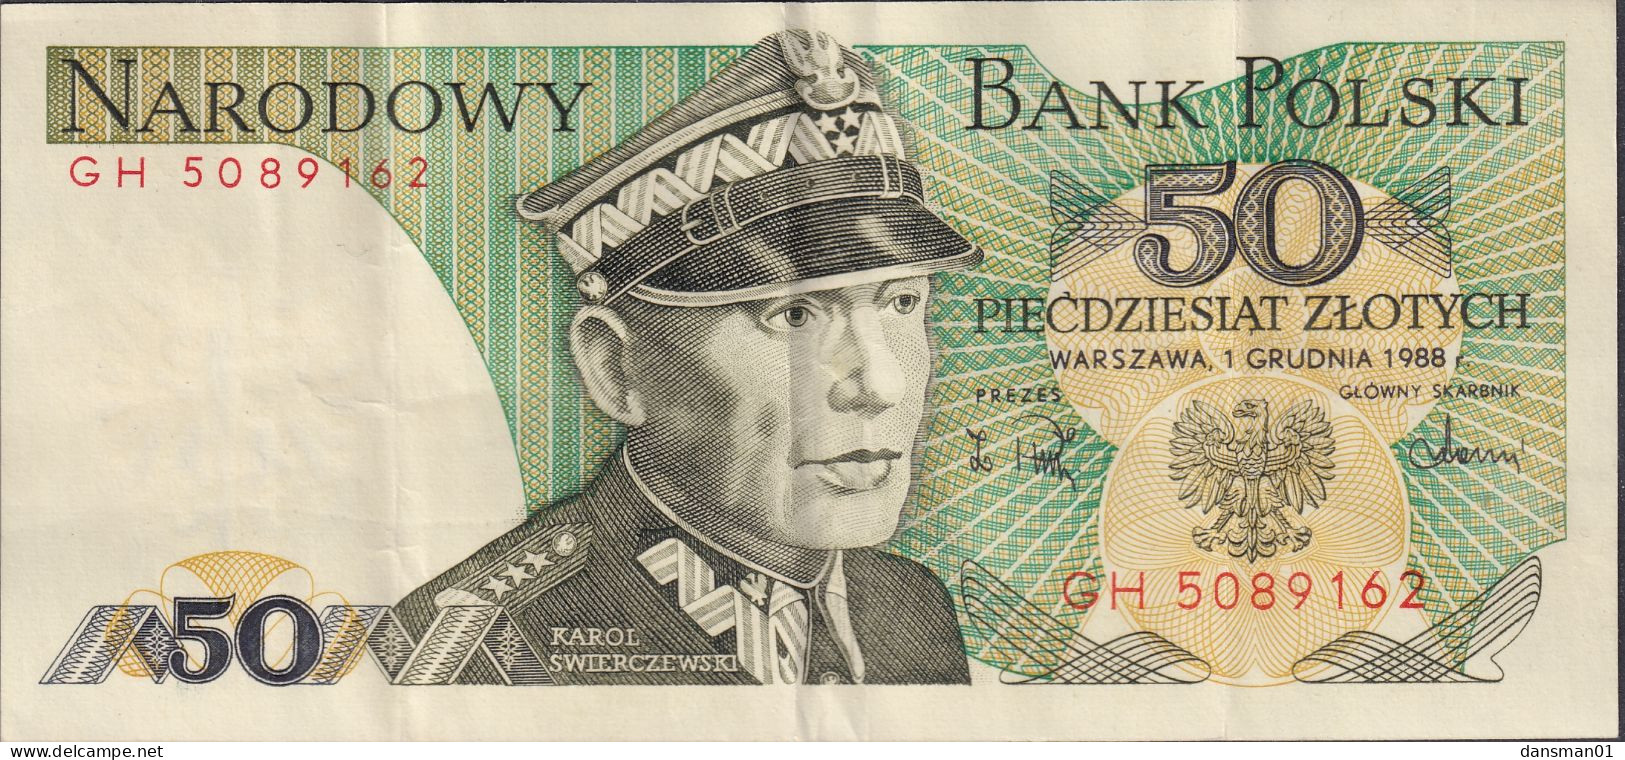 POLAND 1988 50zl Banknote GH 5089162 - Pologne